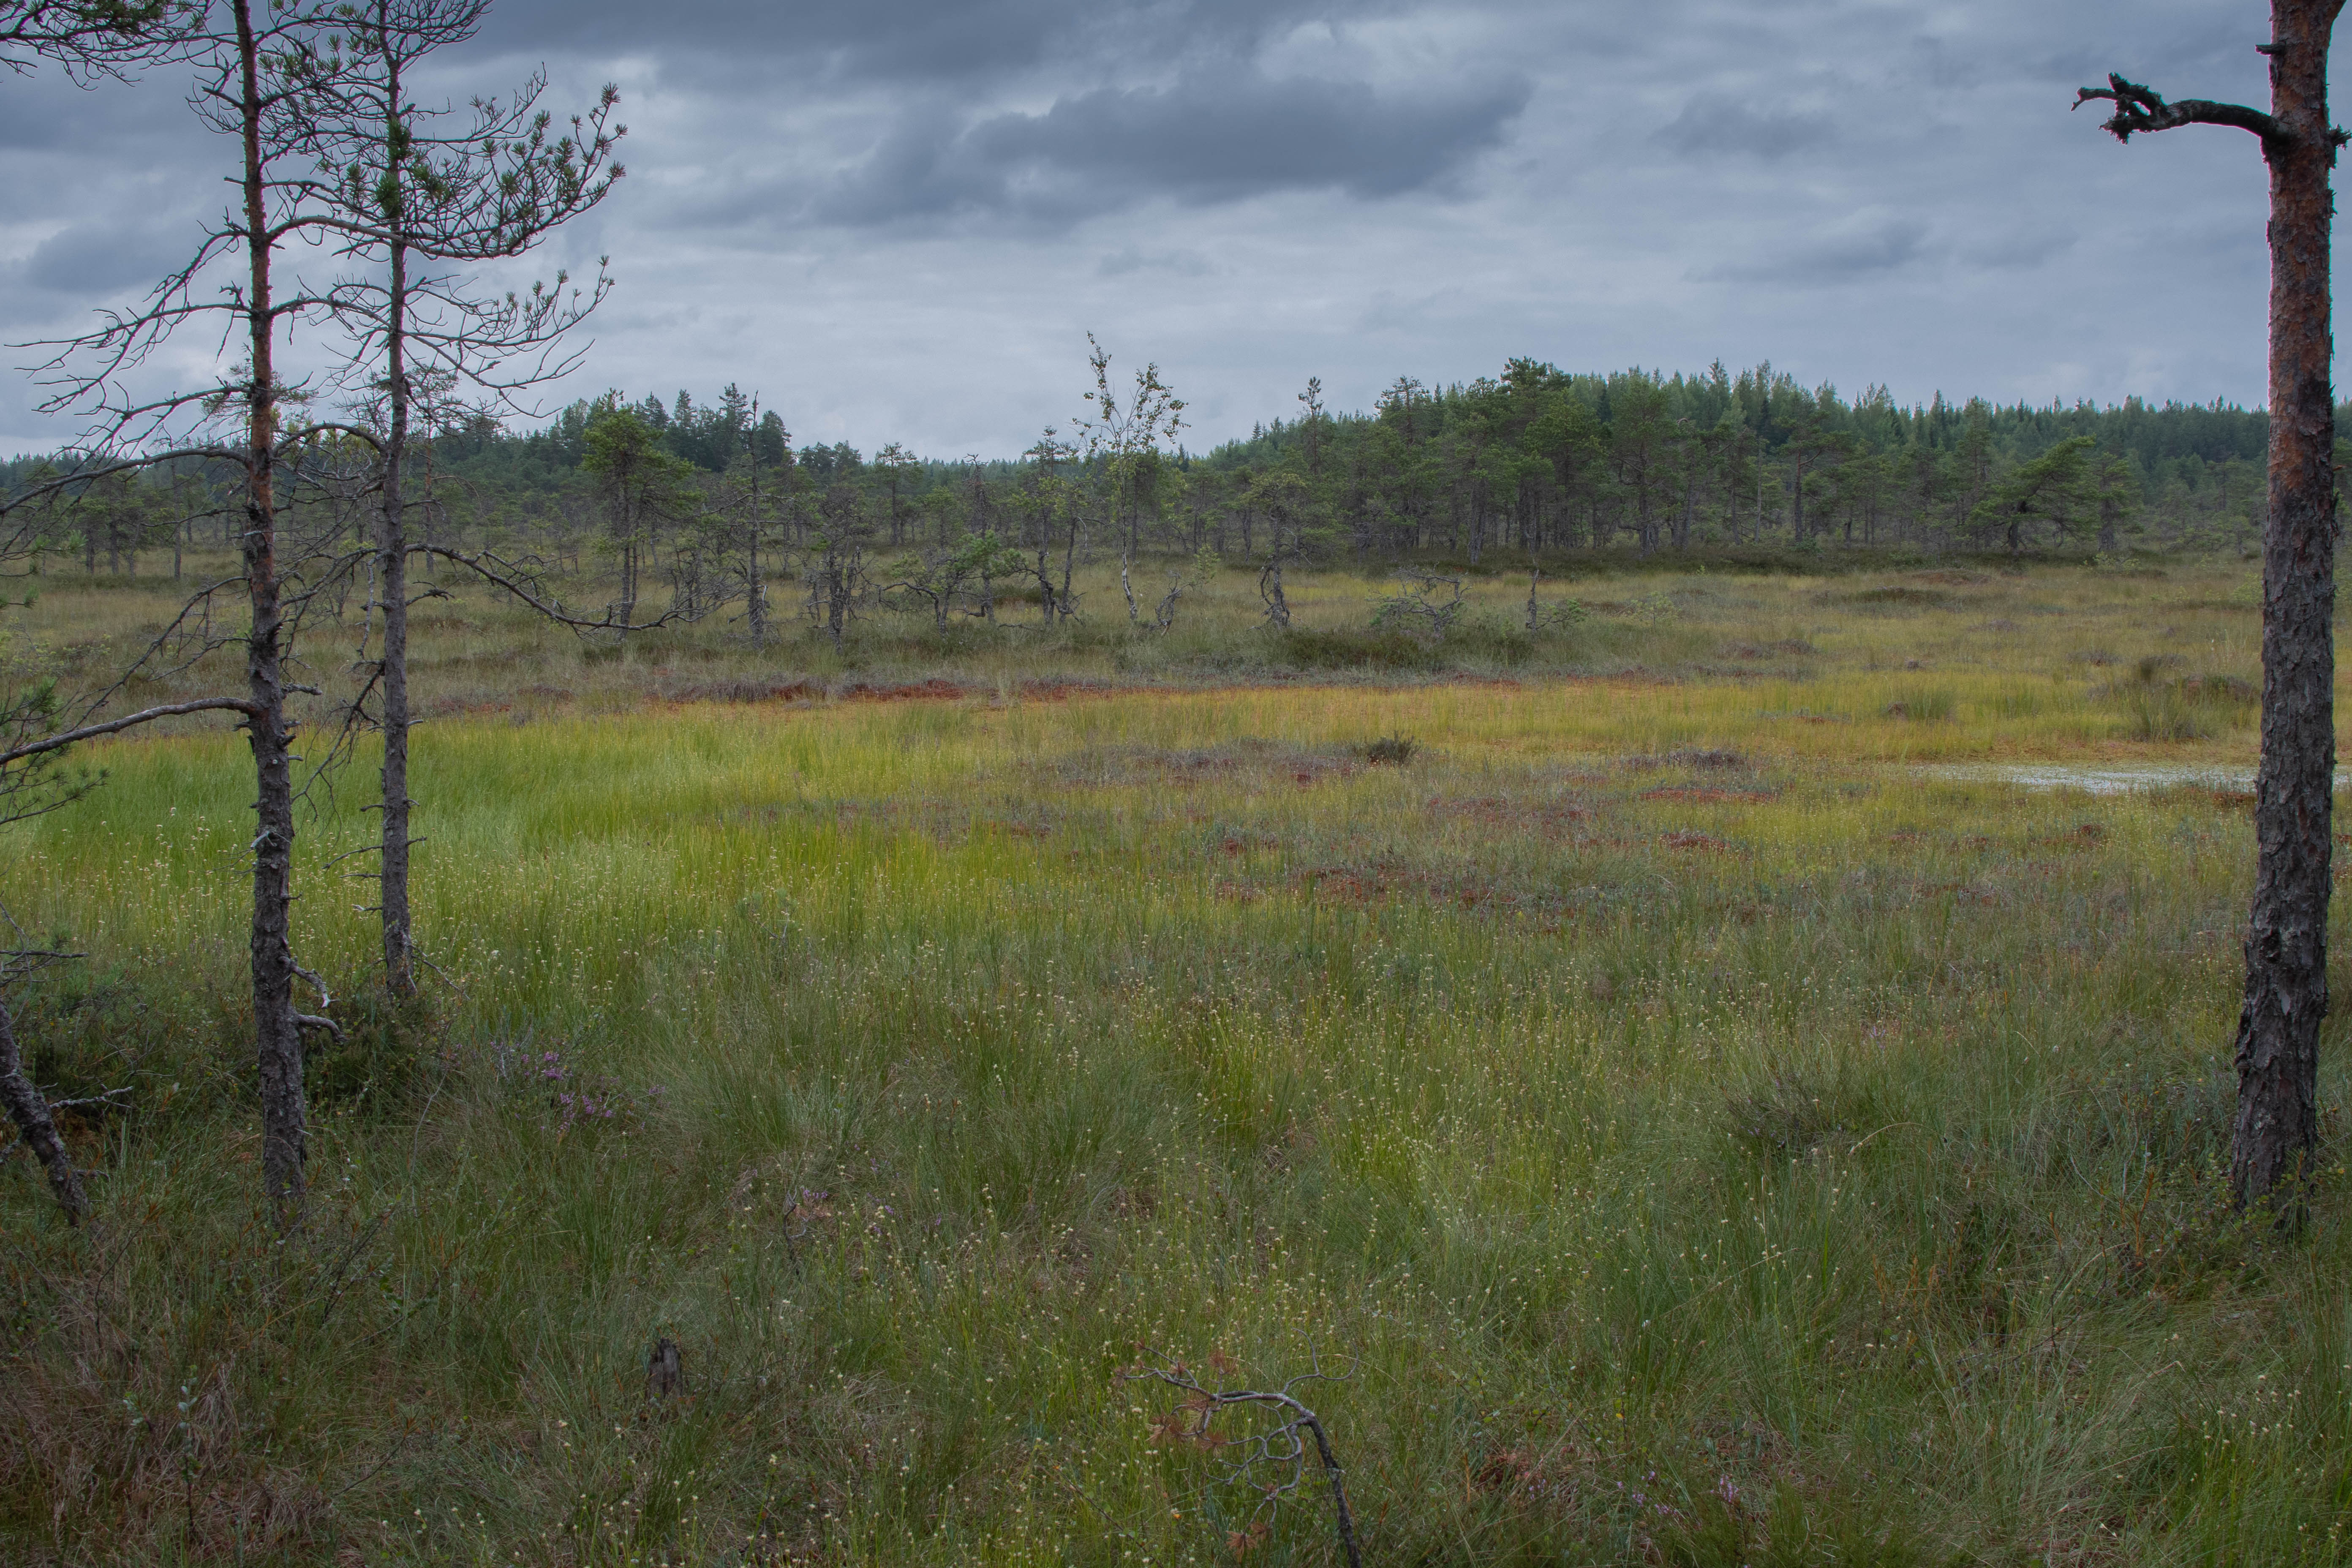 Field Journal: Valkmusa National Park